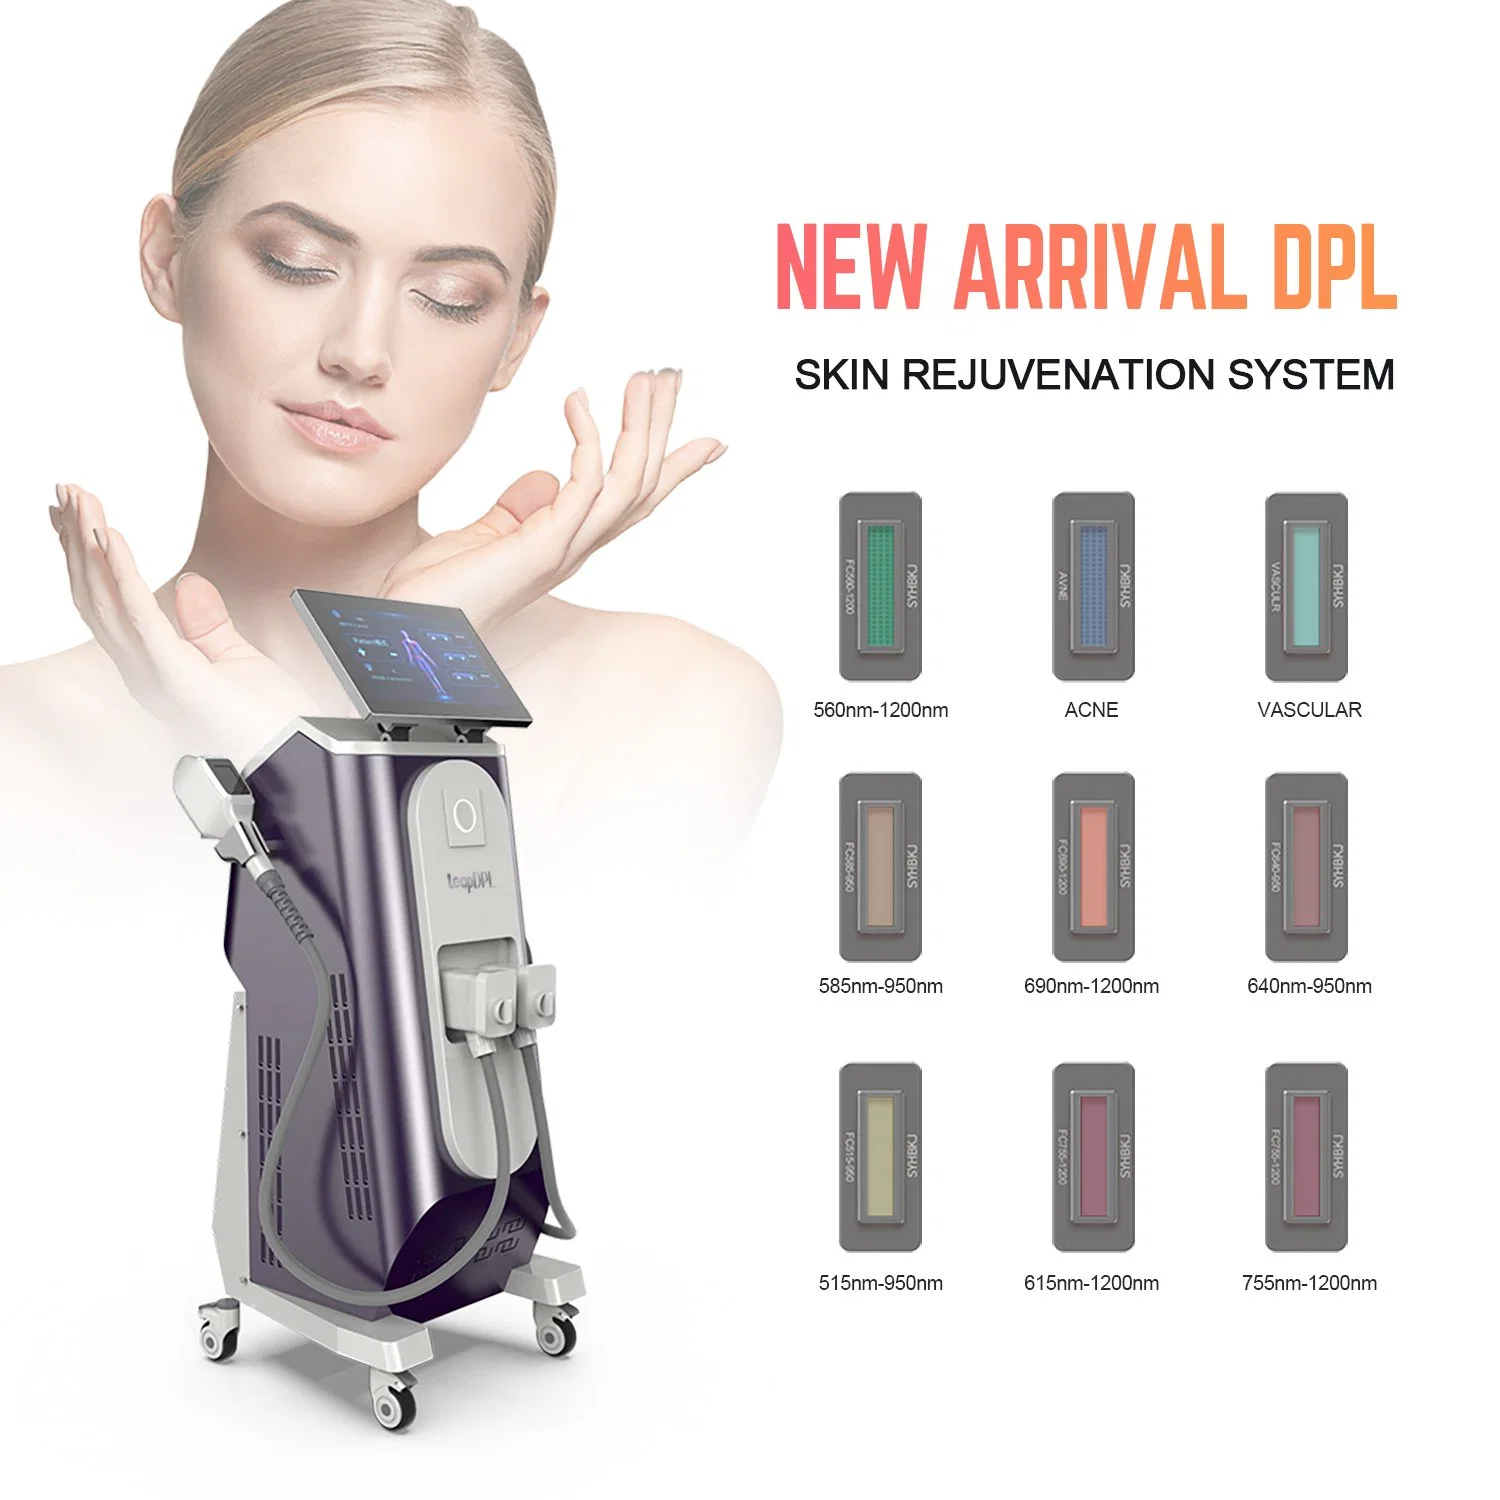 Dpl Hair Removal Machine Skin Tightening Rejuvenation Beauty Equipment